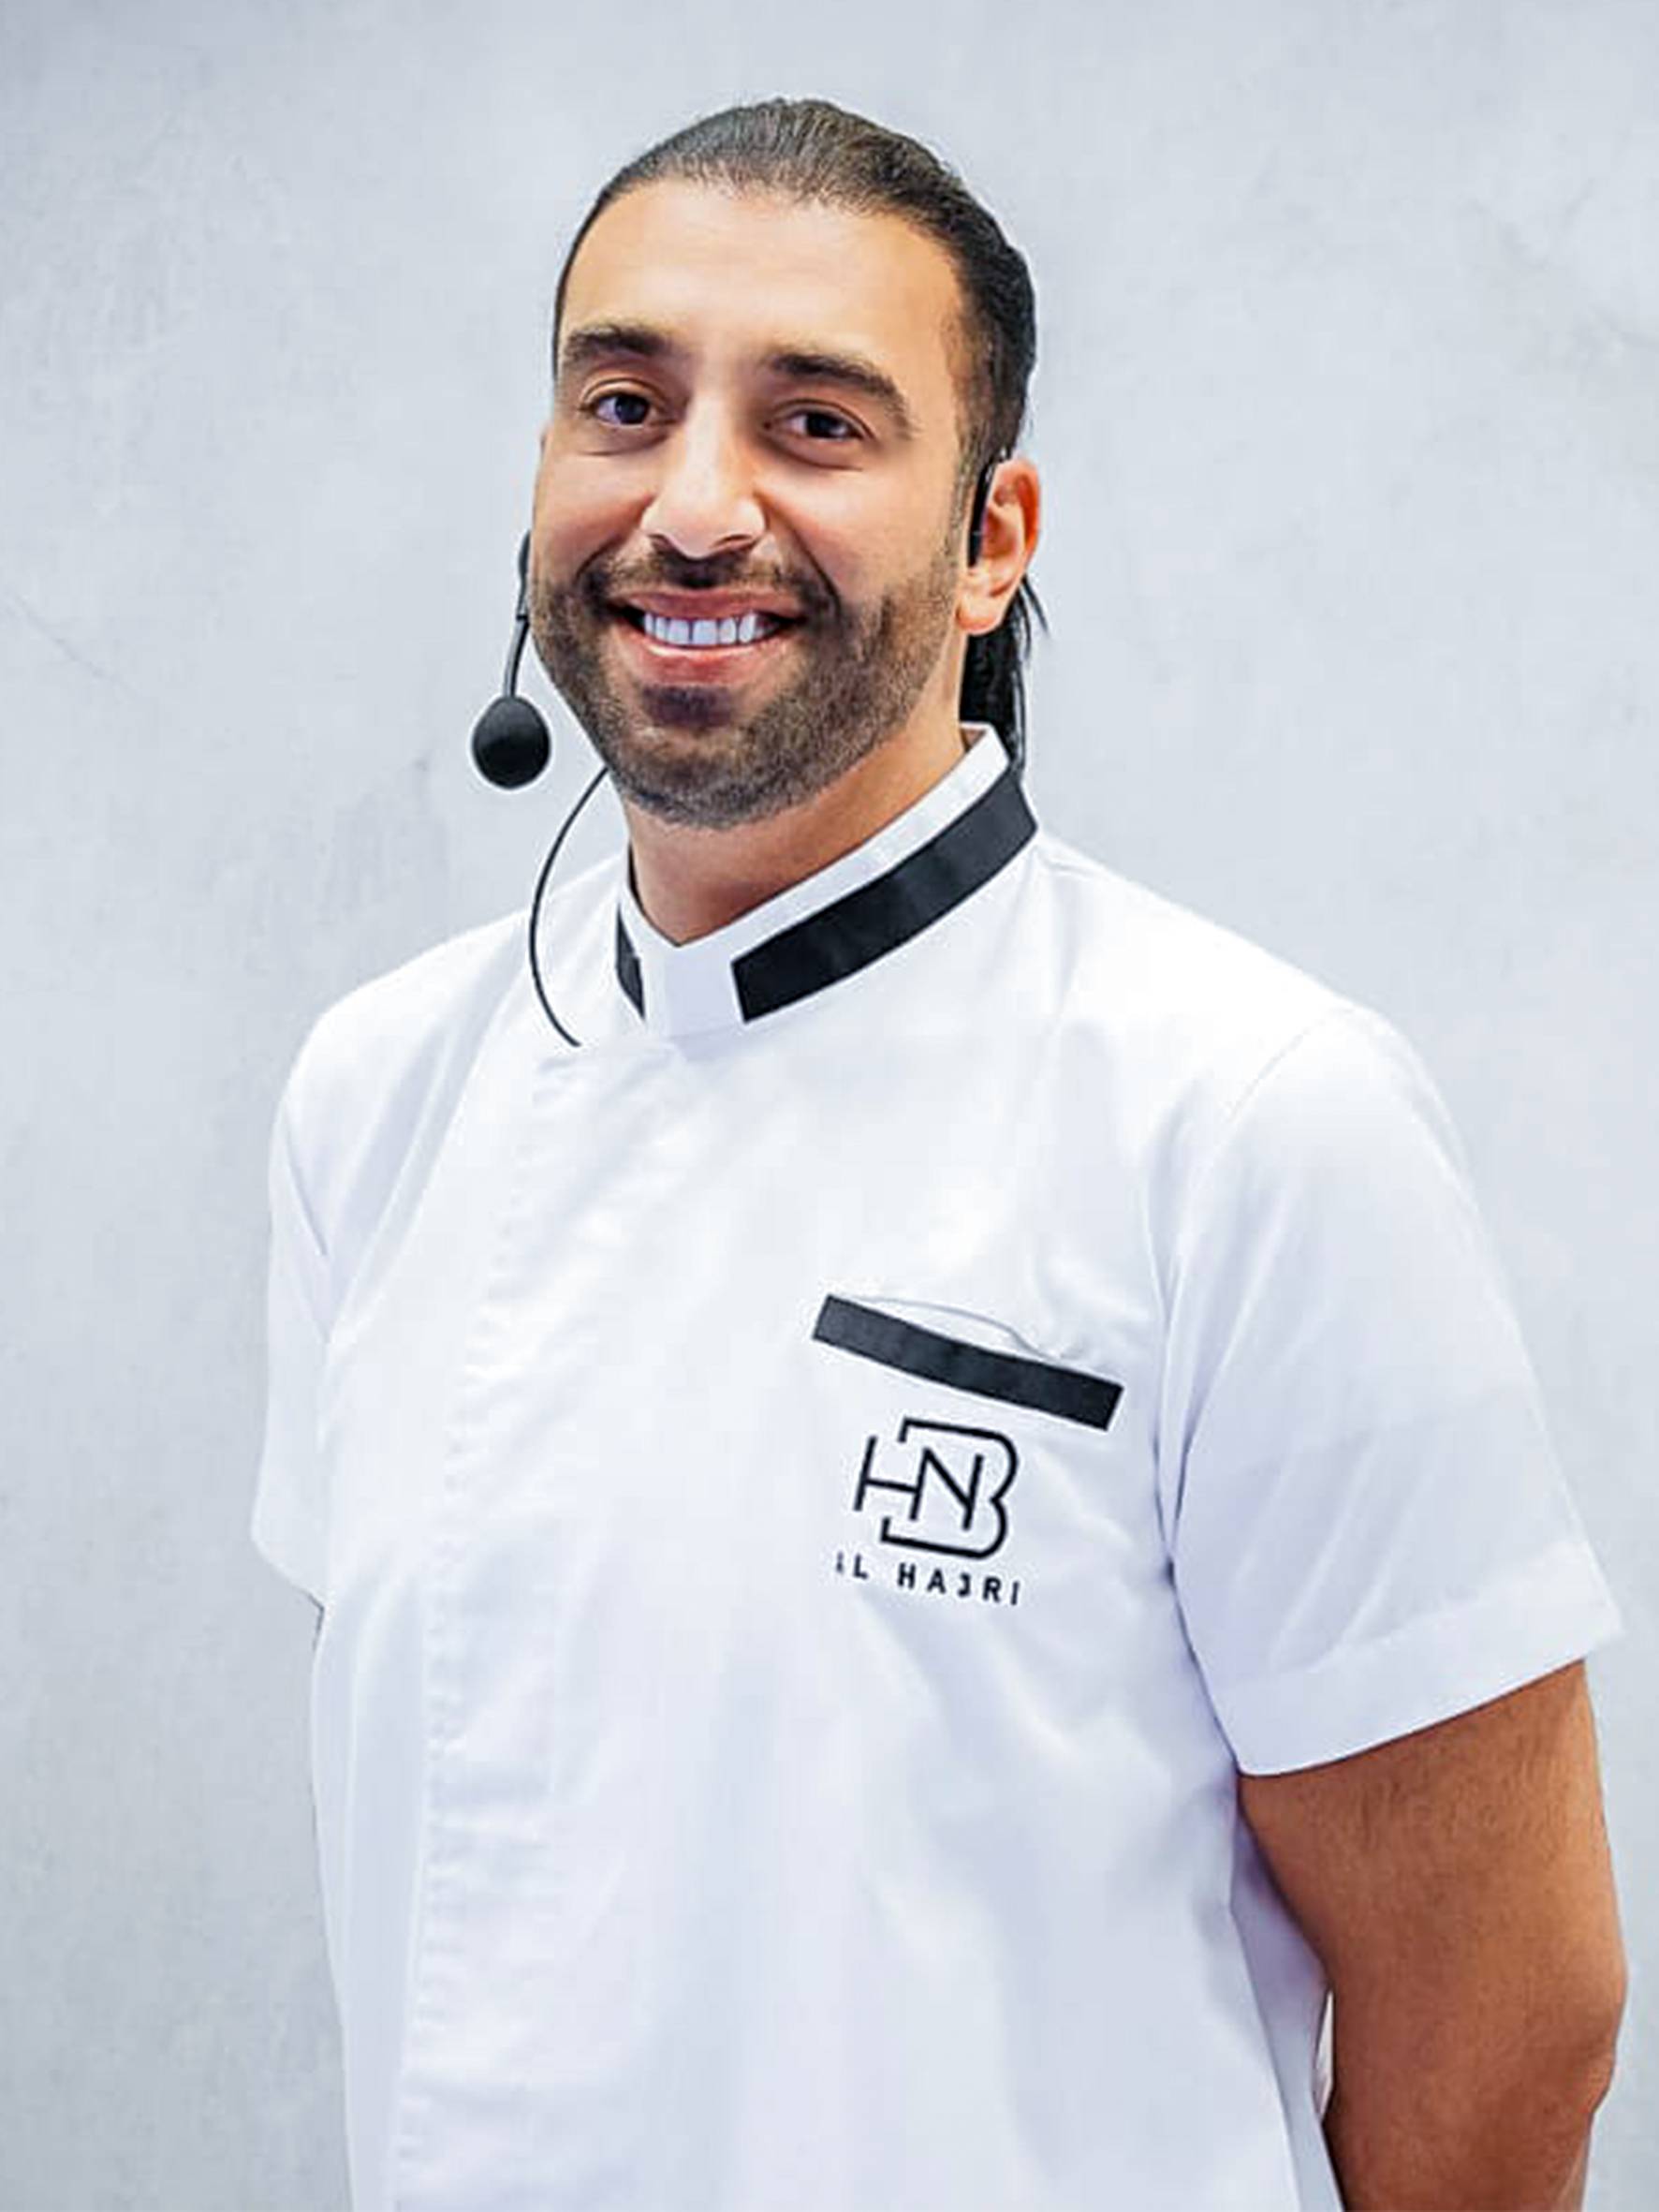 Chef Hamad Alhajri